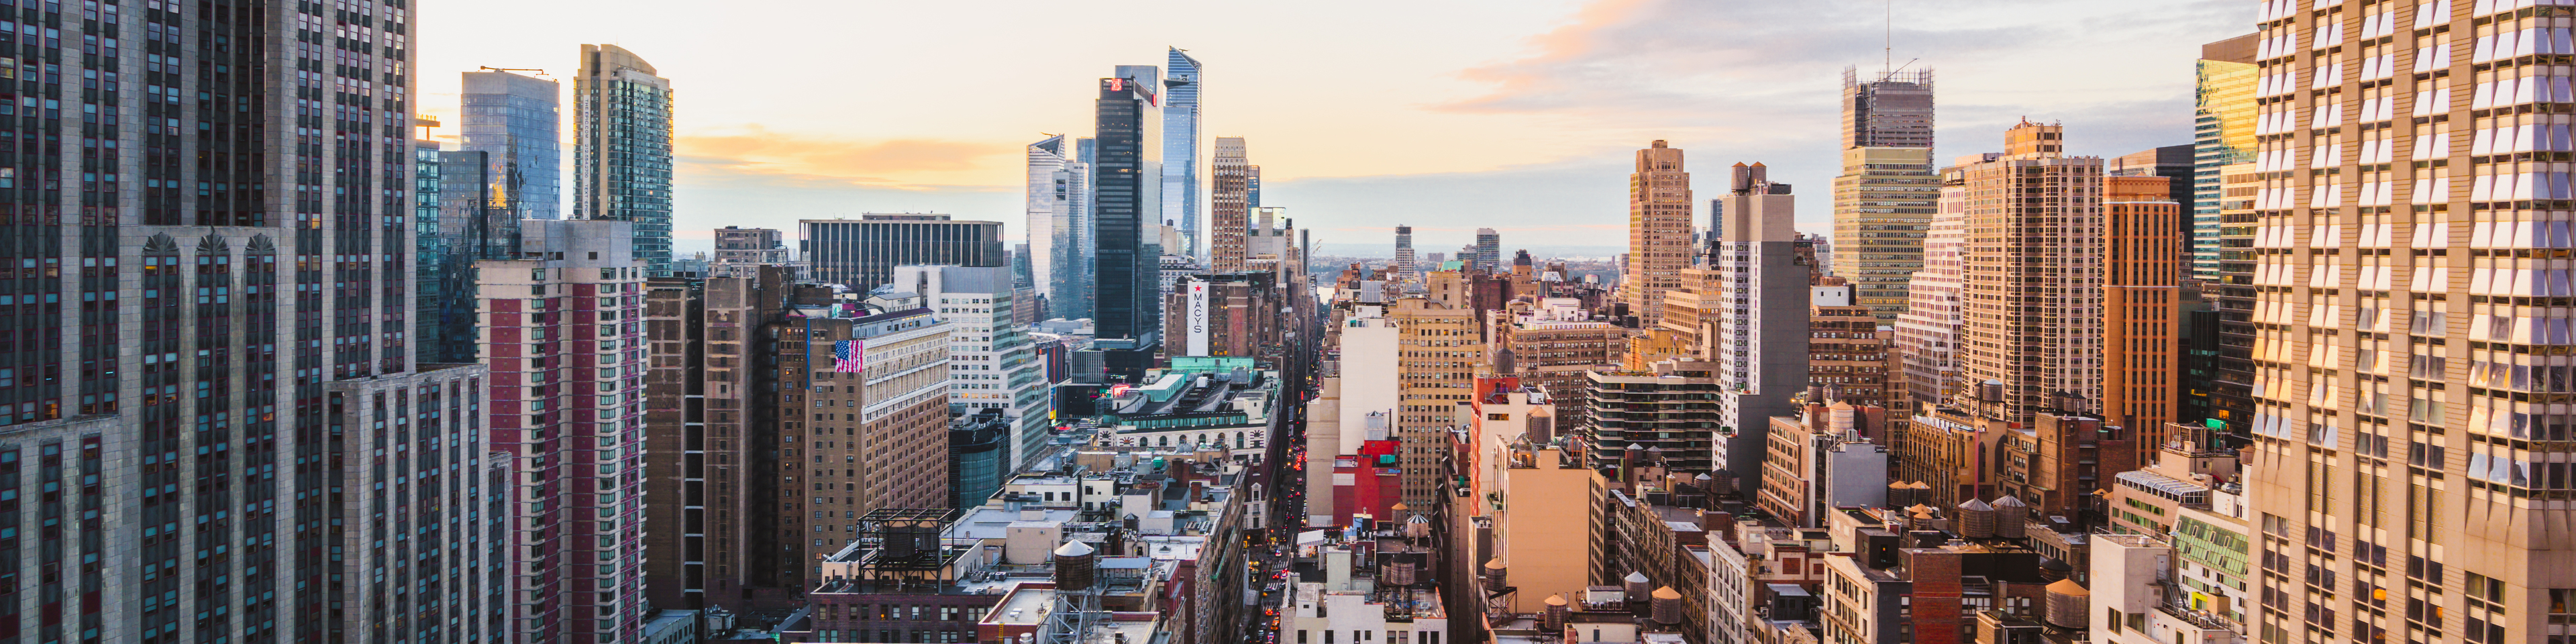 Rooftop view of Midtown Manhattan skyline, New York City 